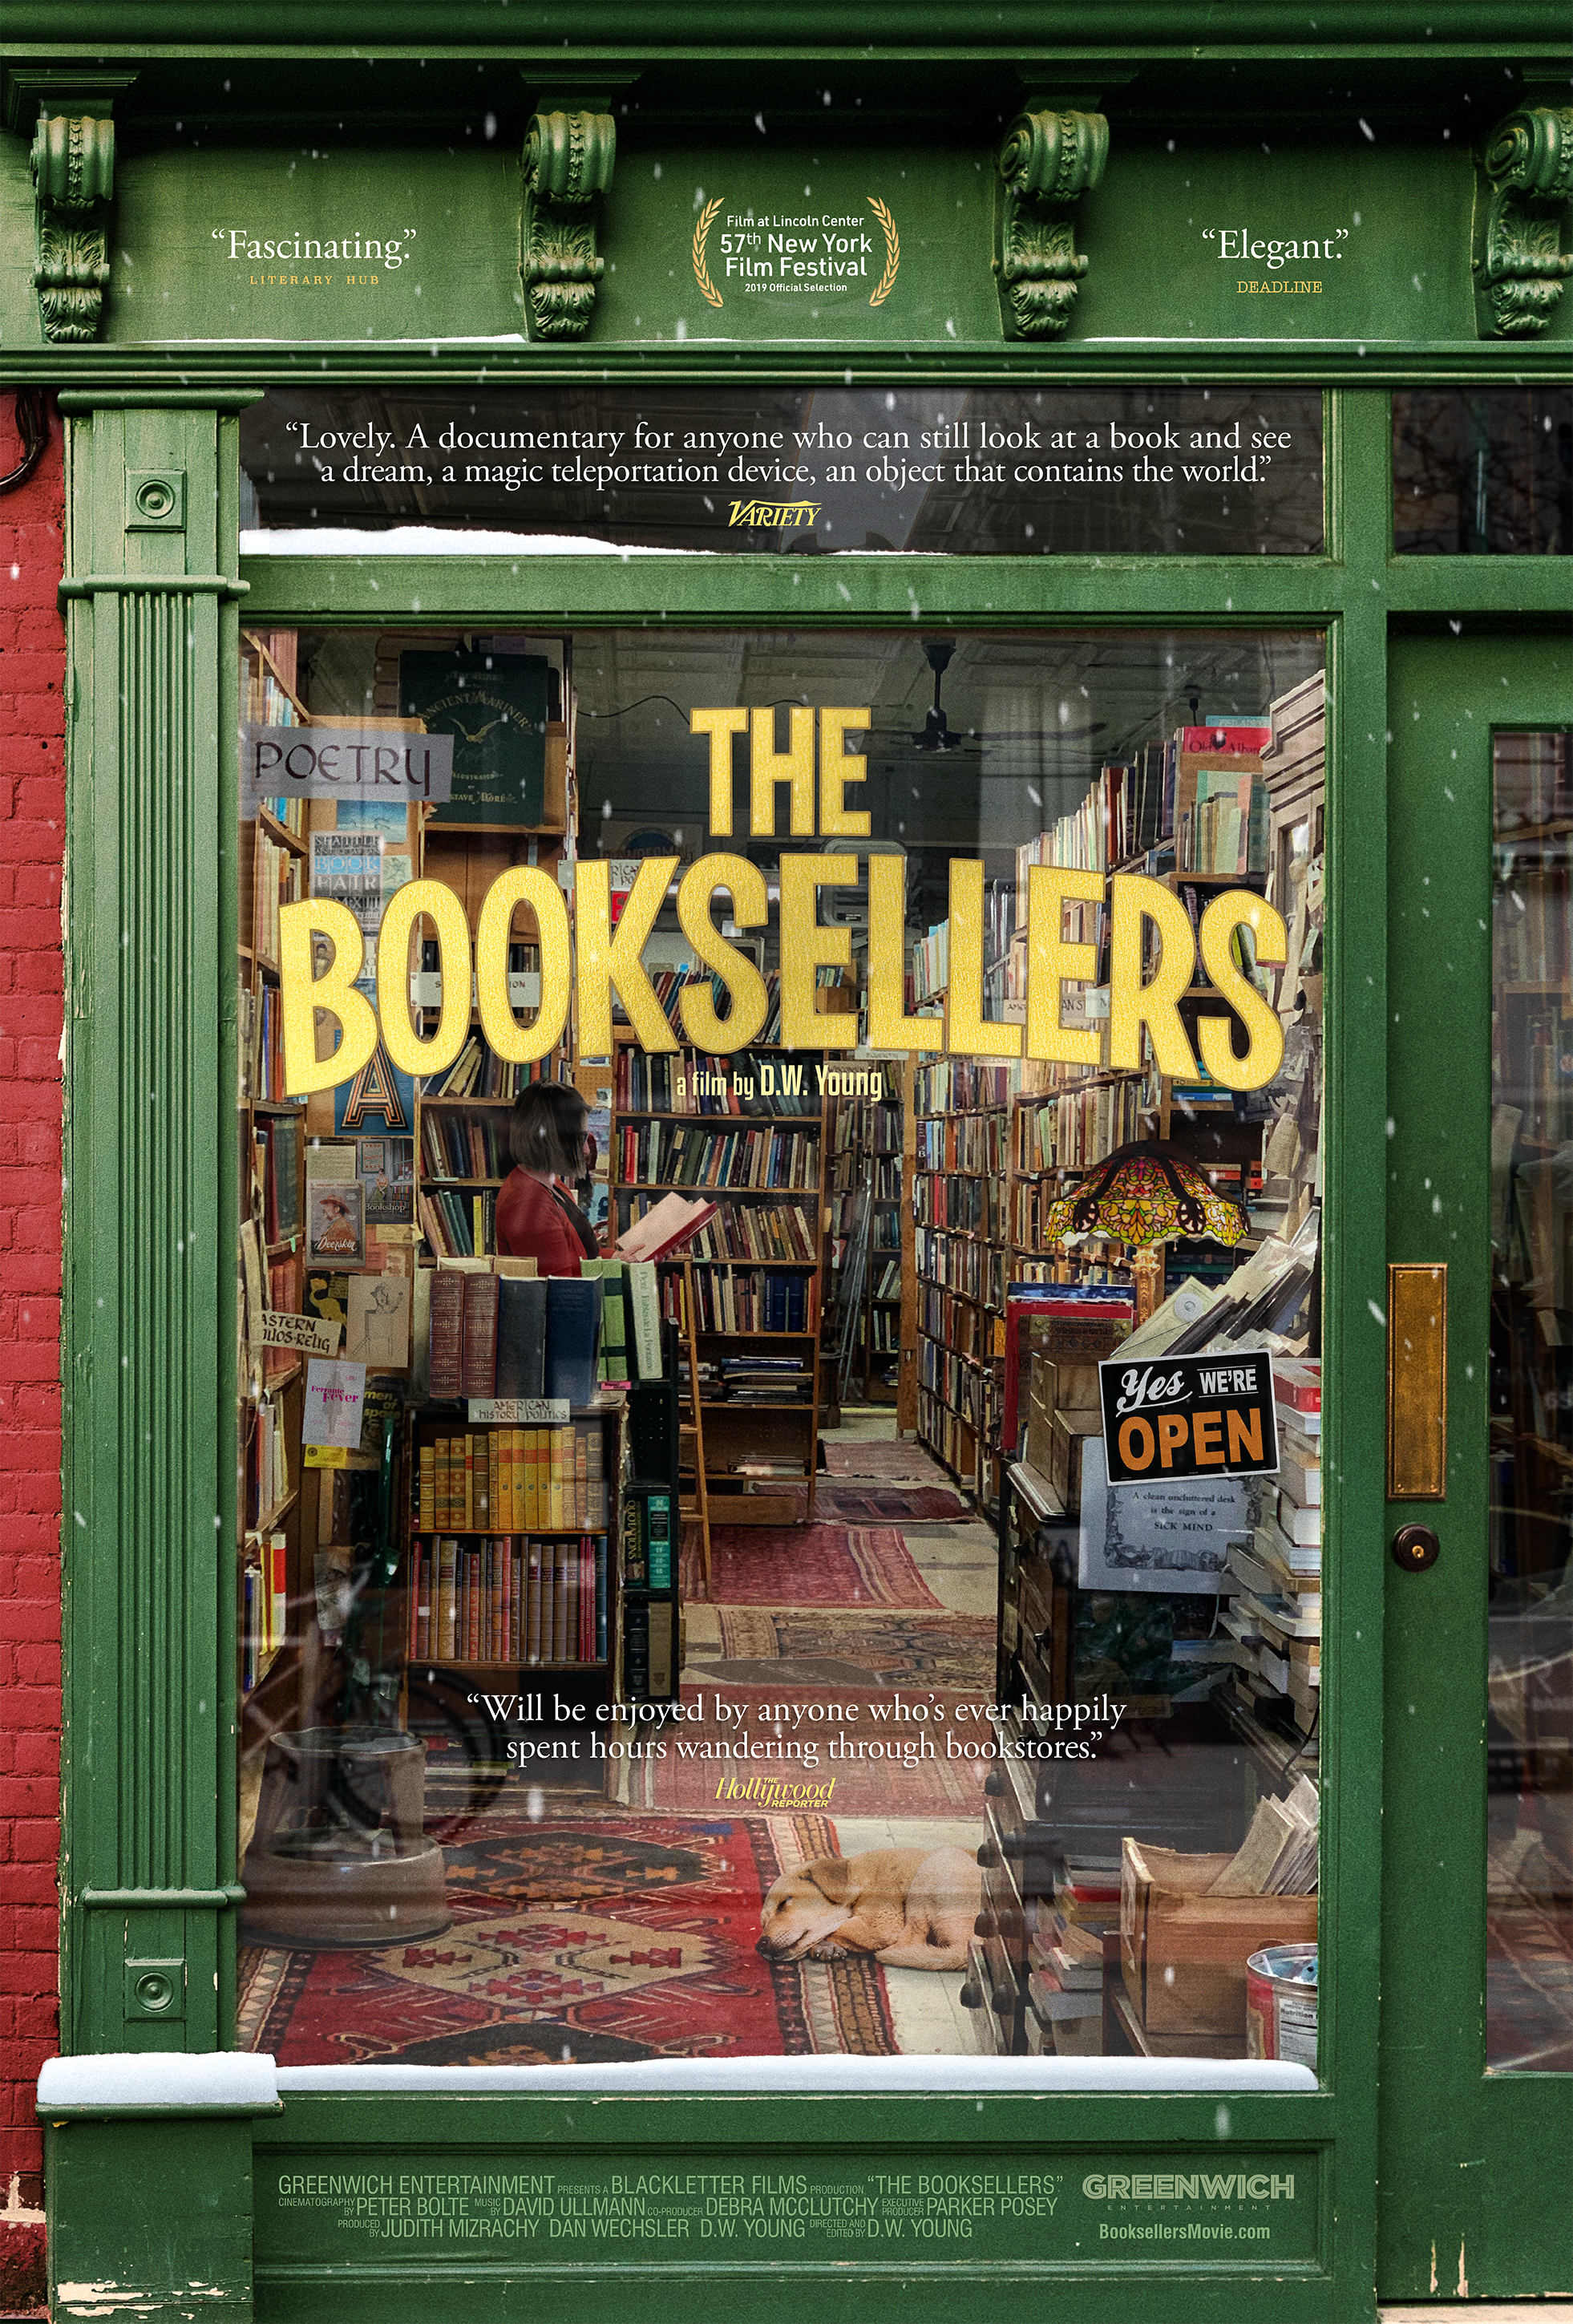 Nonton film The Booksellers layarkaca21 indoxx1 ganool online streaming terbaru